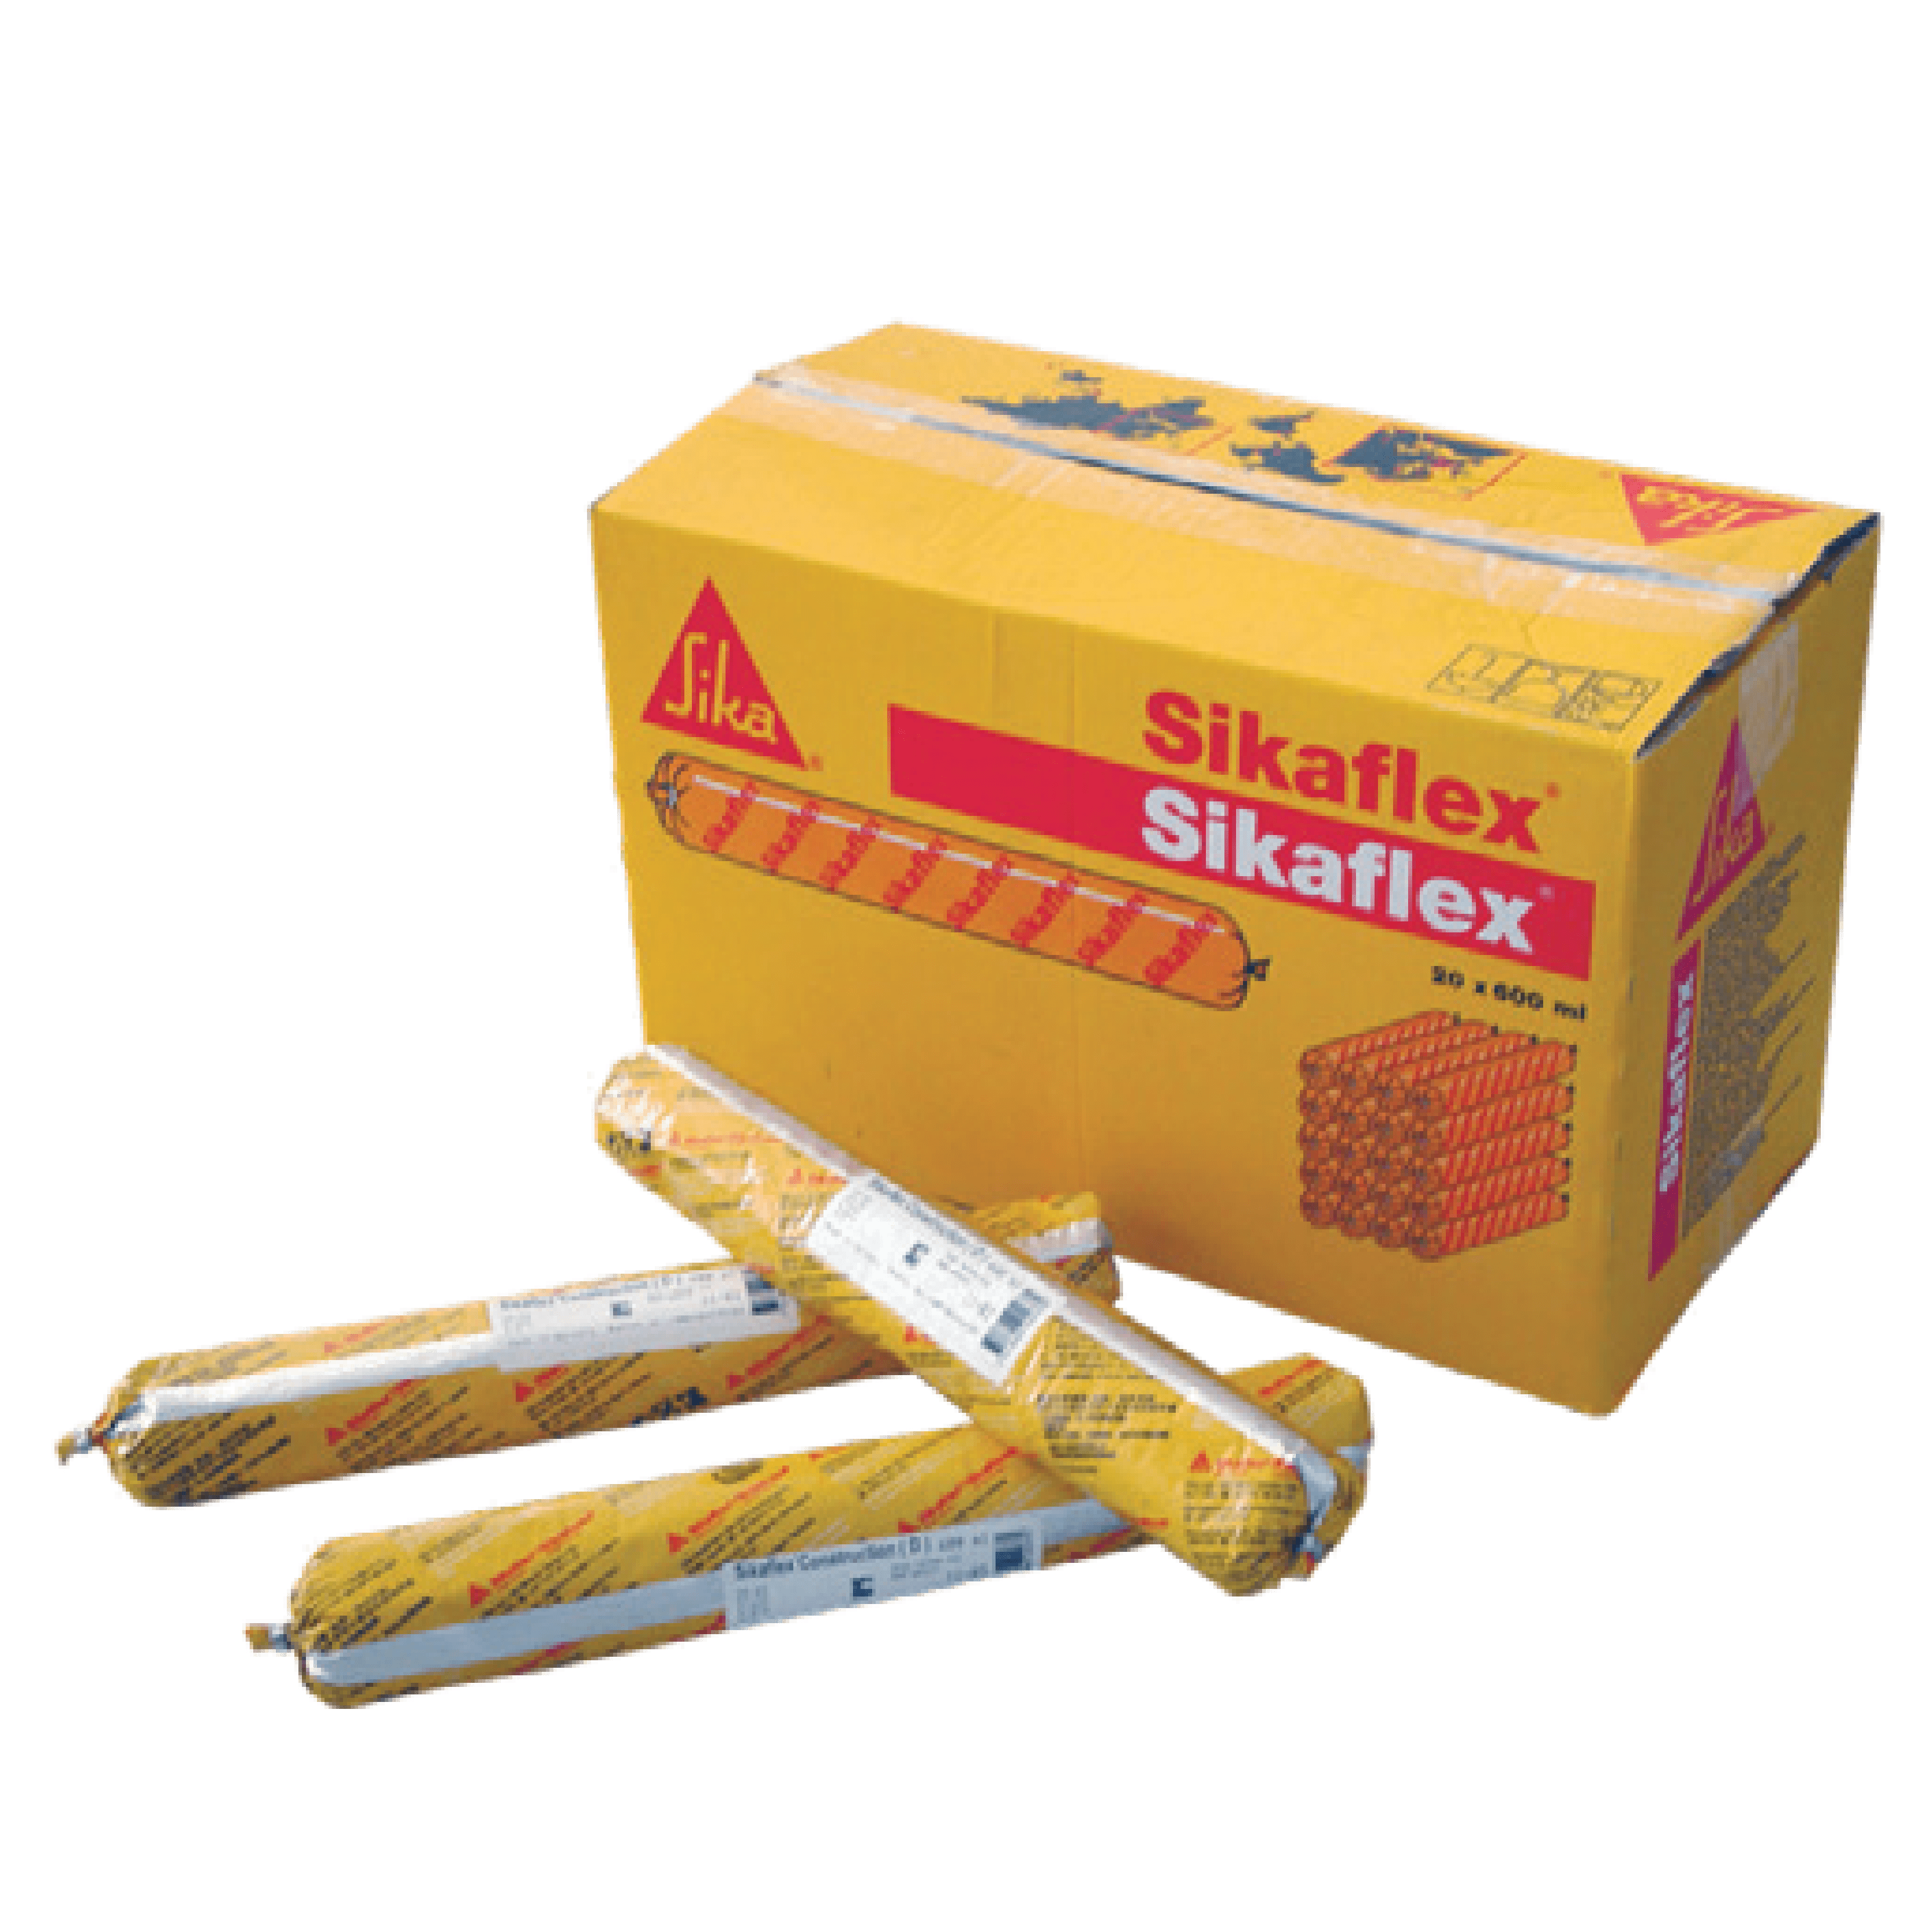 Sikaflex®+ Construction Sealant